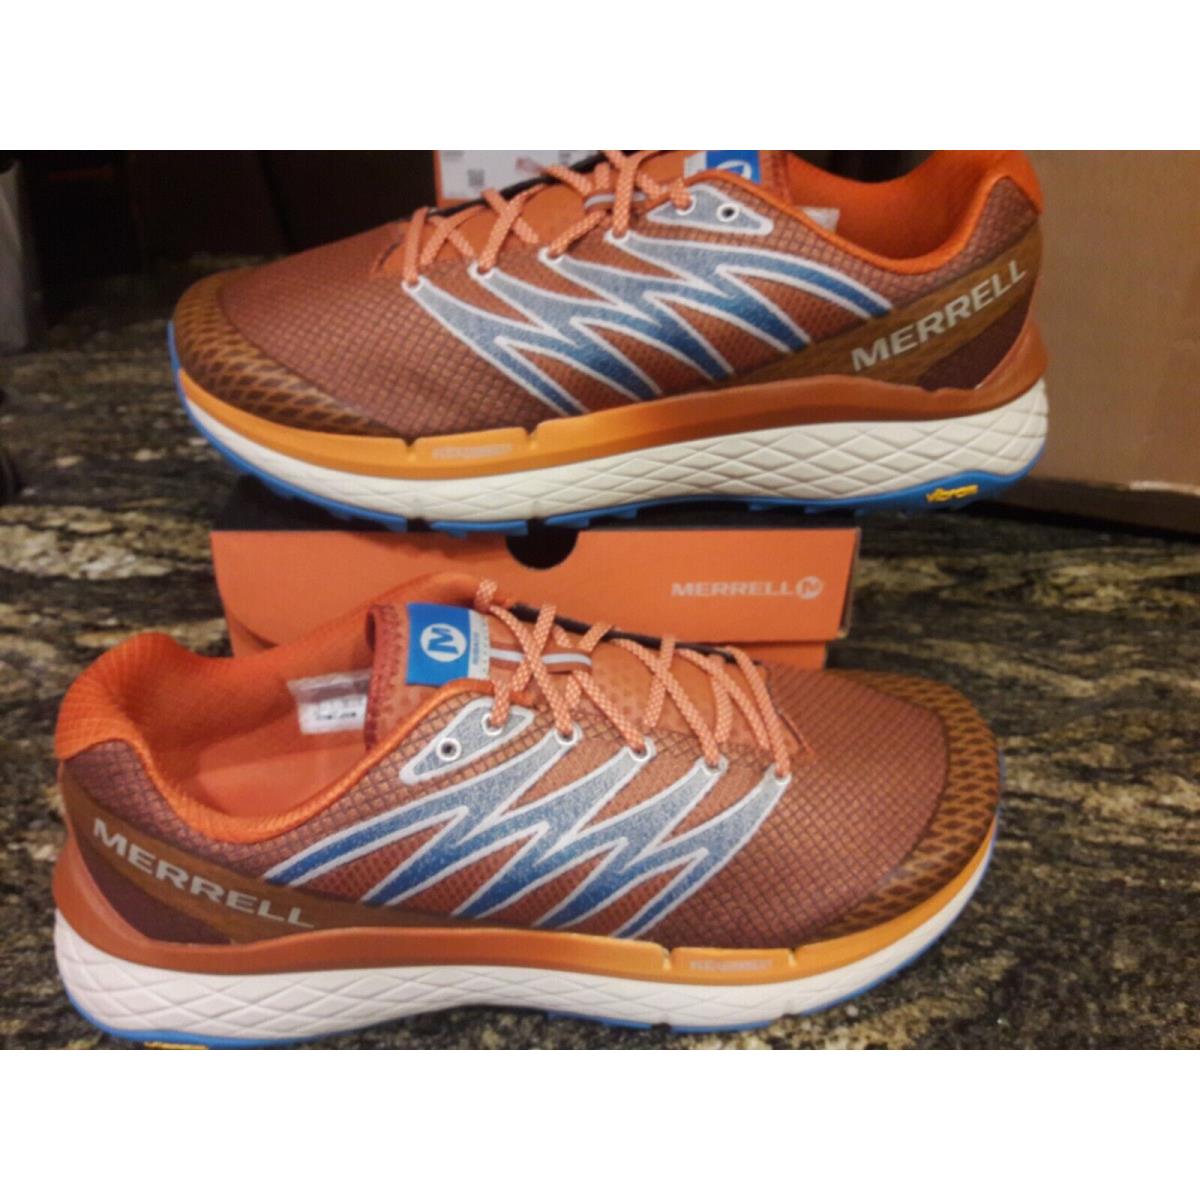 Mens Merrell Rubato Trail Running Shoes Size 14